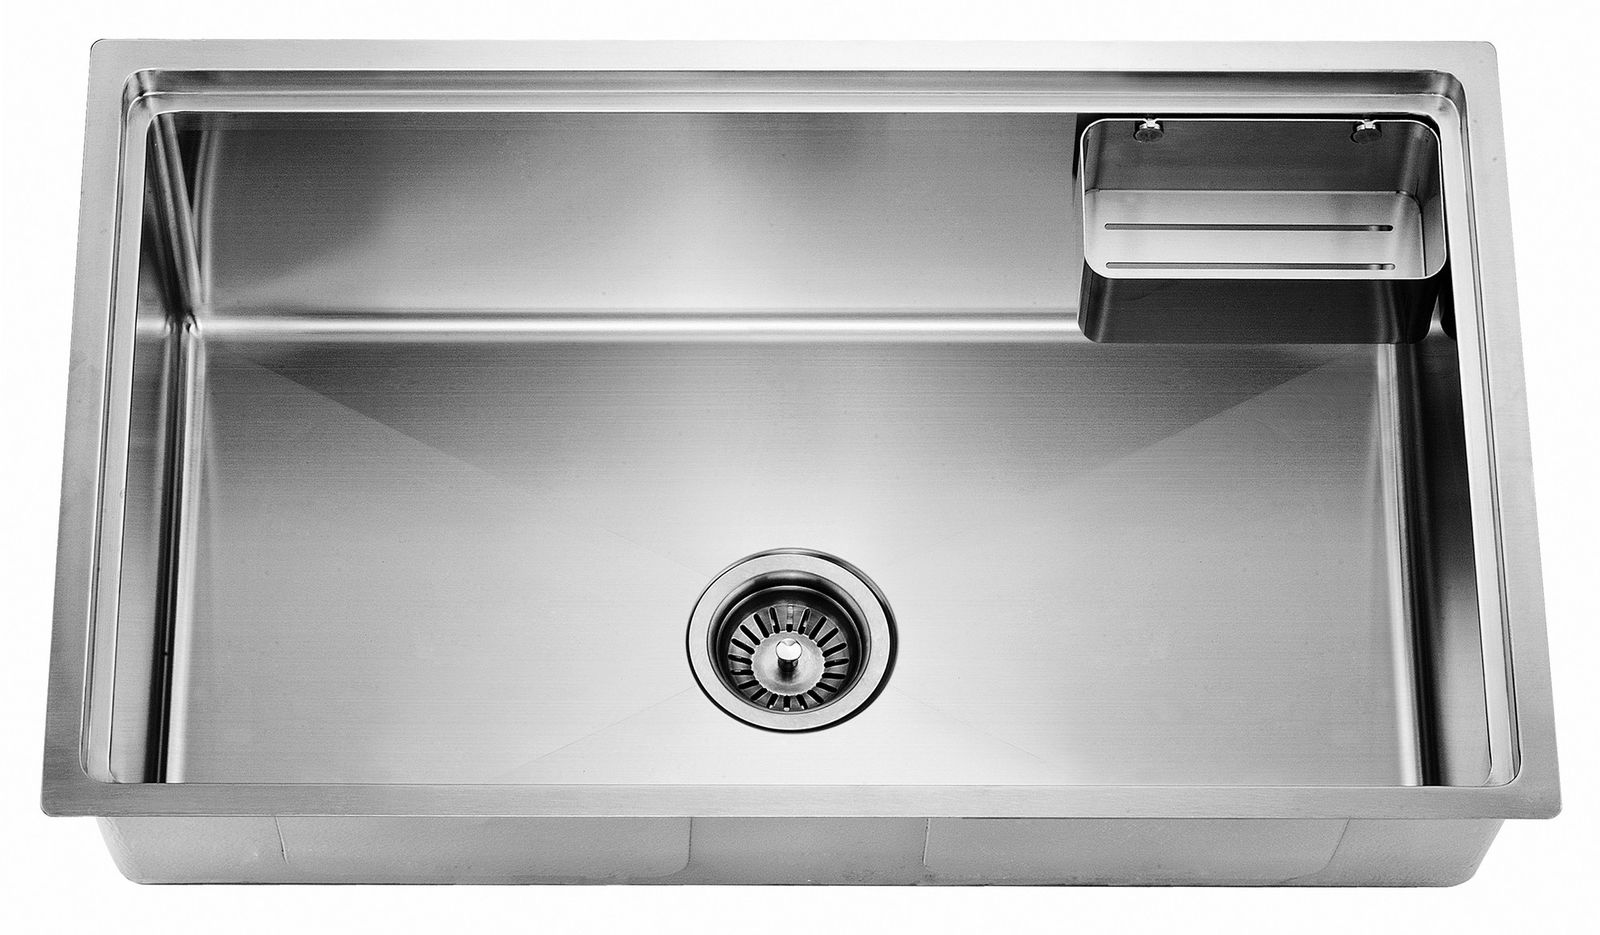 Dawn SRU281610 29 inch Single Bowl Undermount 18 Gauge Stainless Steel Kitchen Sink-Kitchen Sinks Fast Shipping at DirectSinks.